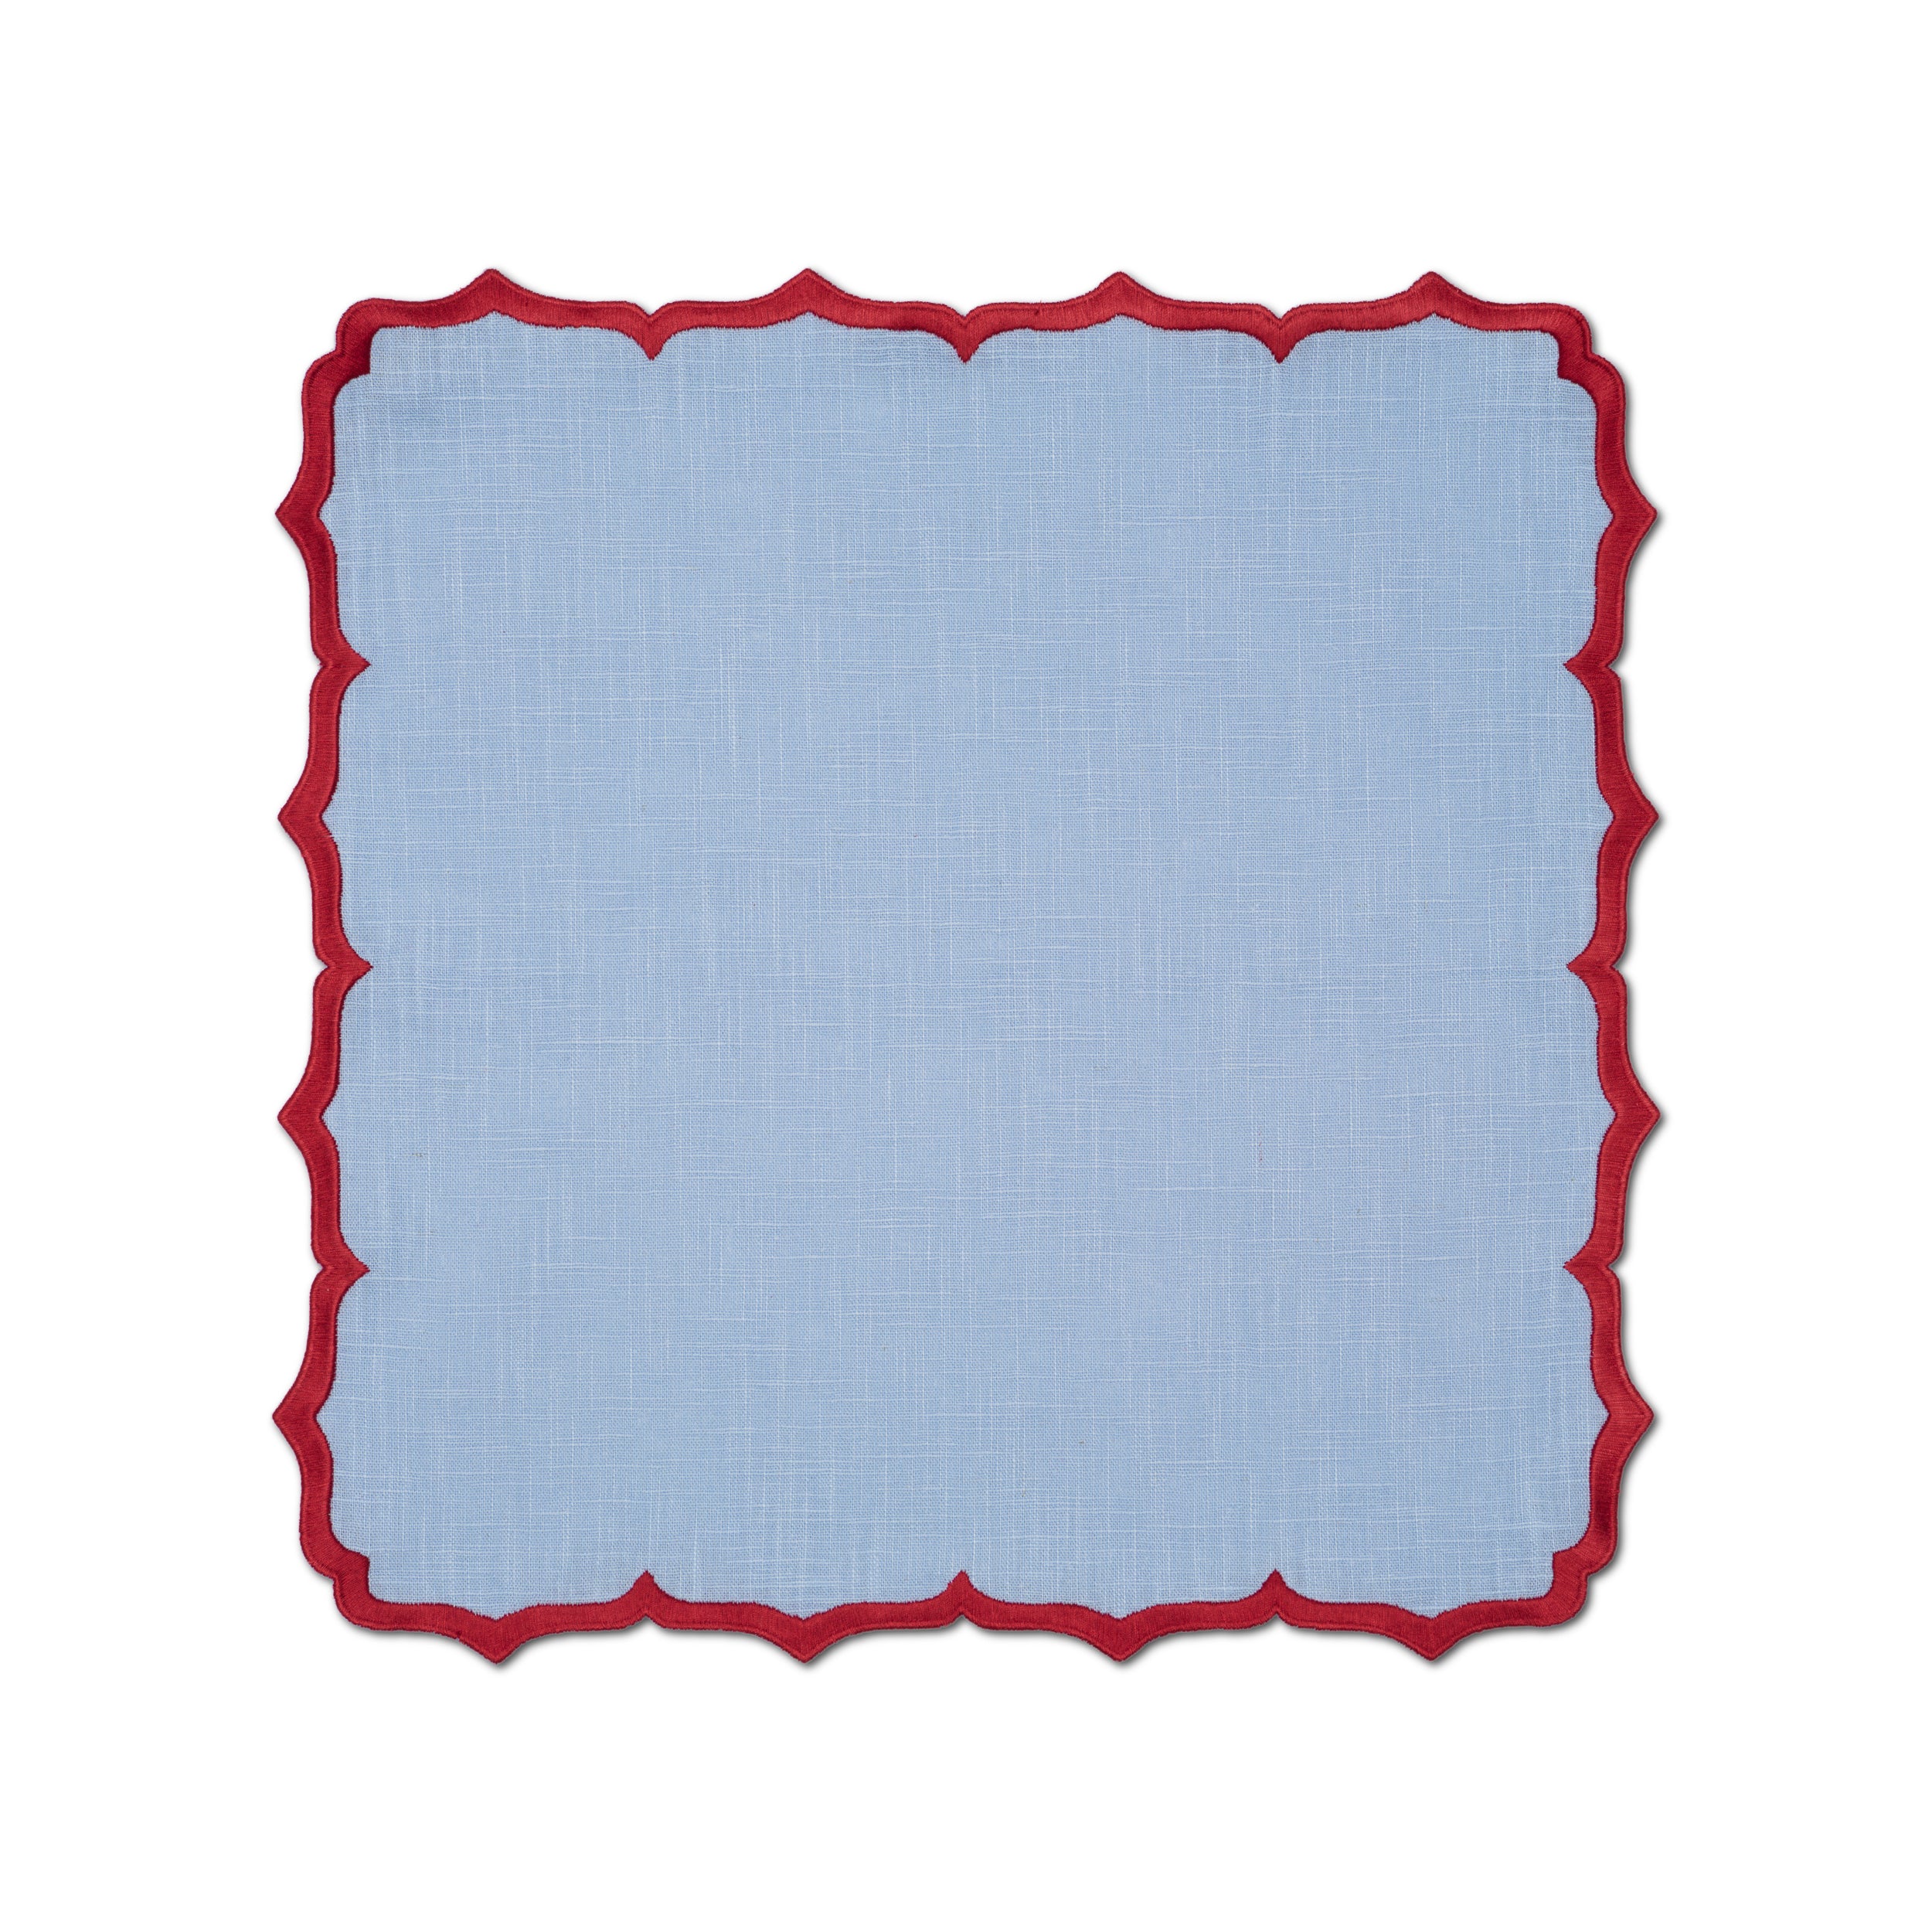 Iza Napkin | Blue red - set of 4